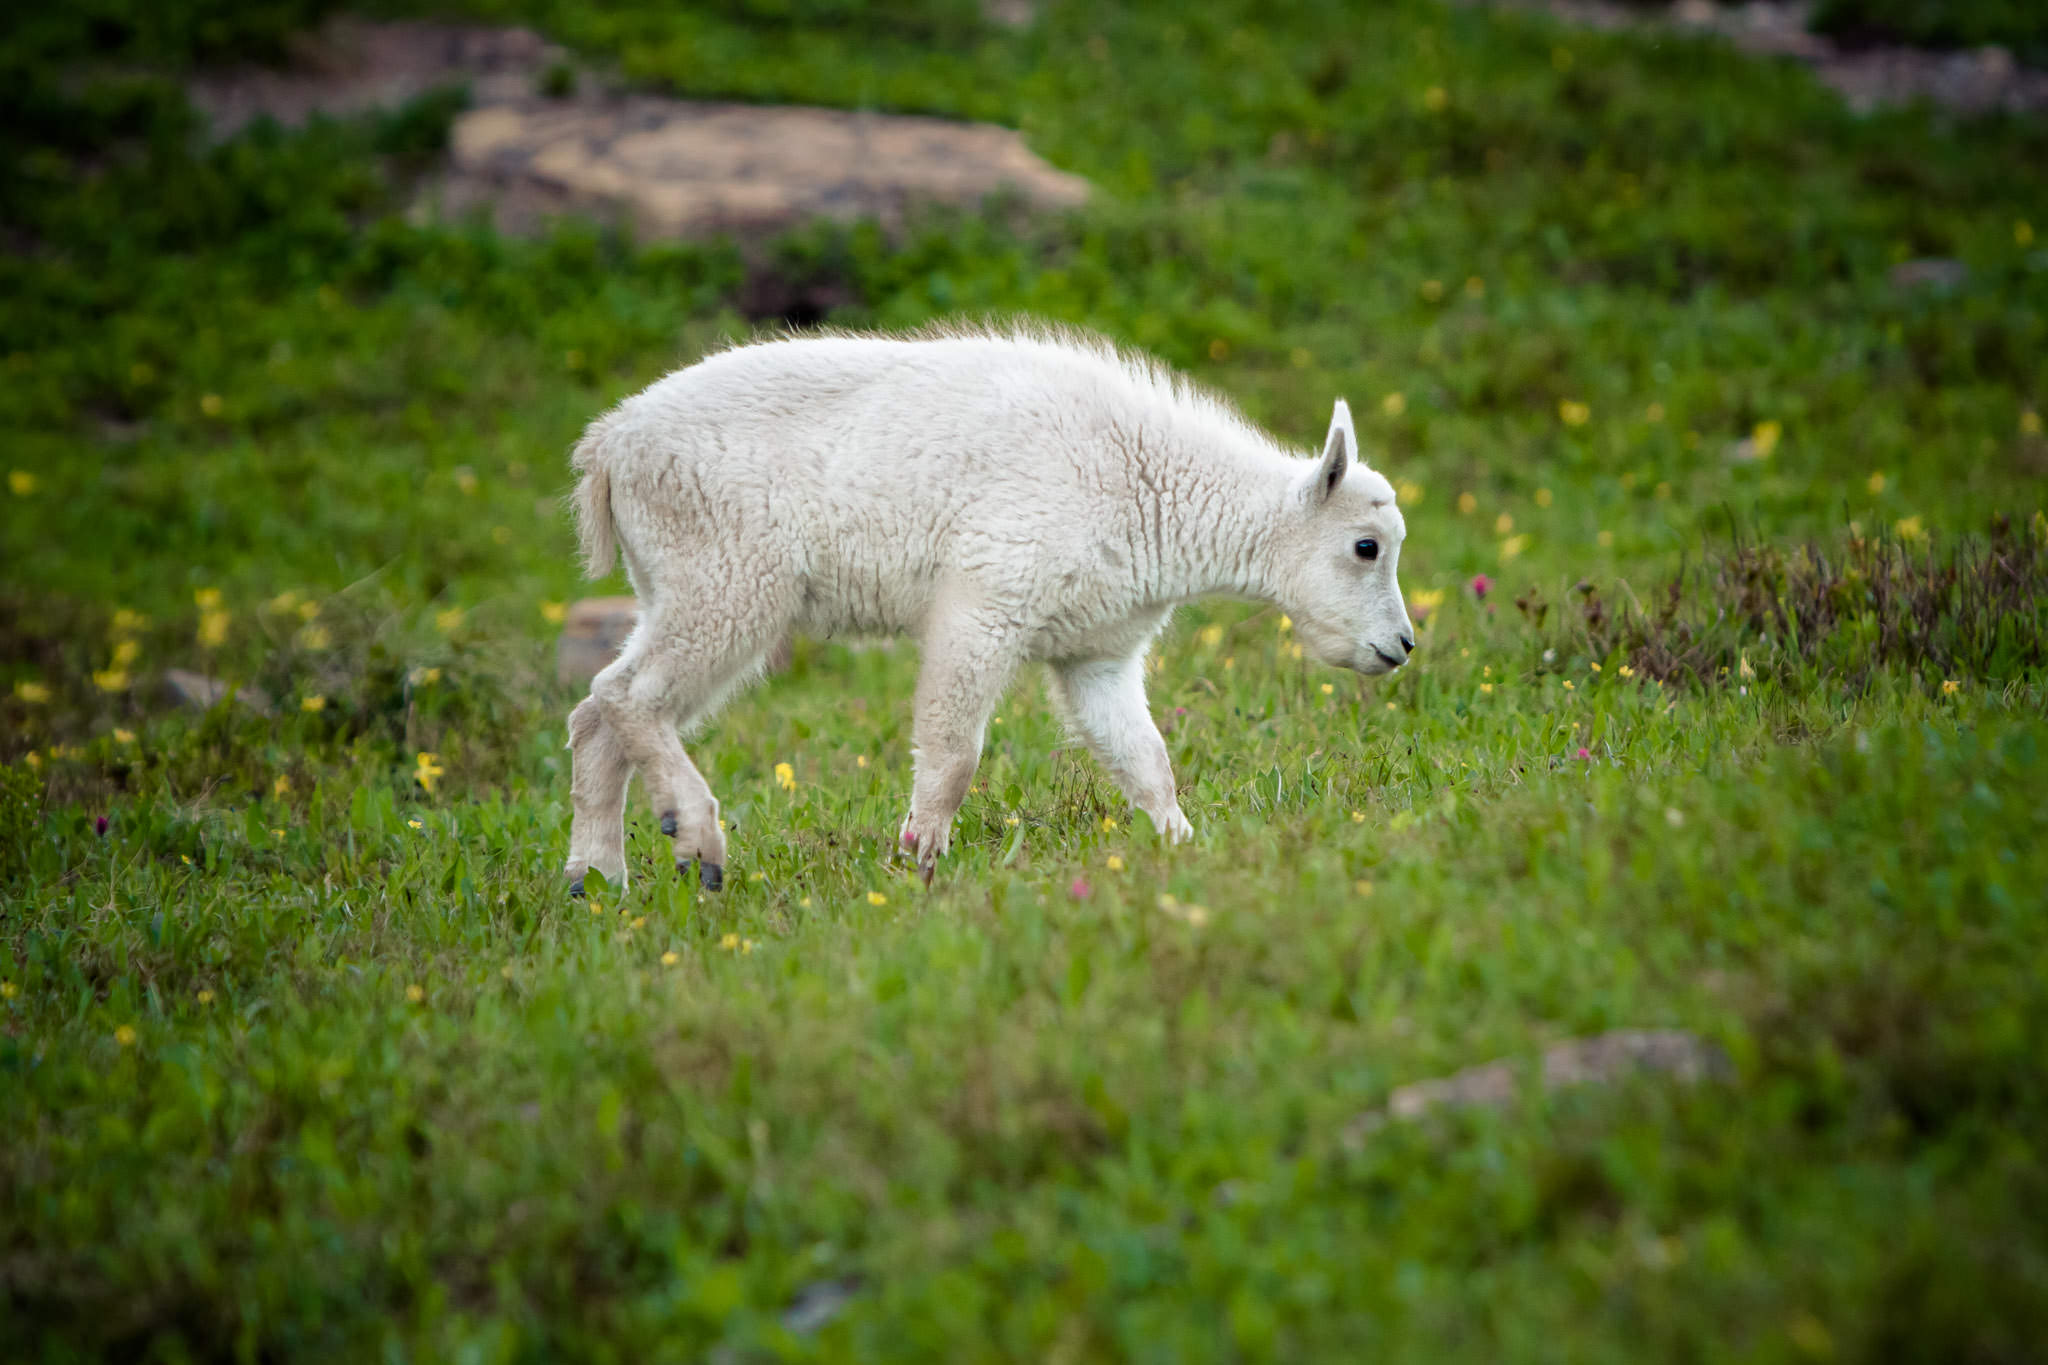  Mountain Goat kid  Glacier National Park  #20130711_0576-2 